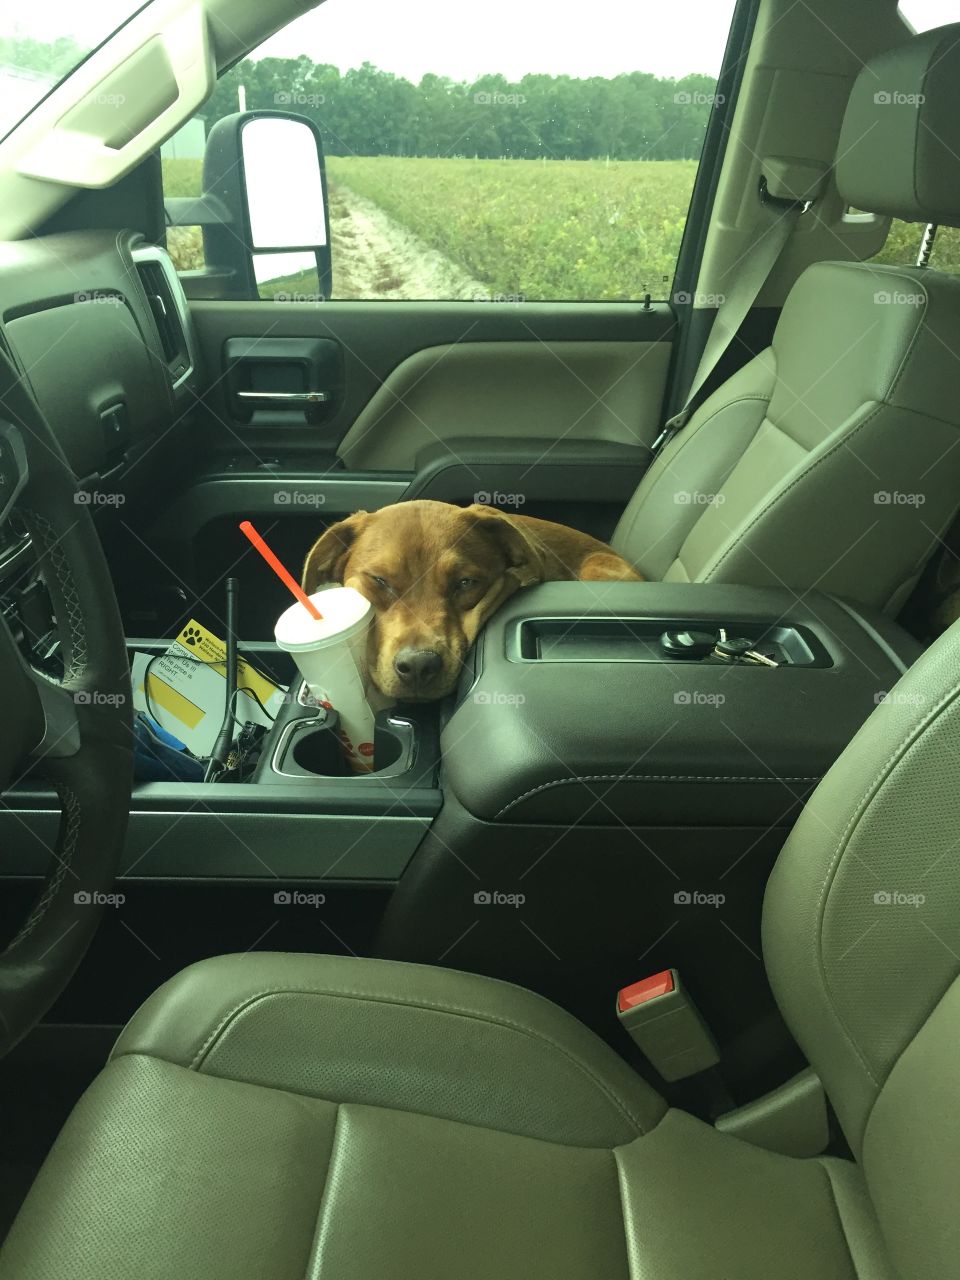 Sleepy dog in the truck